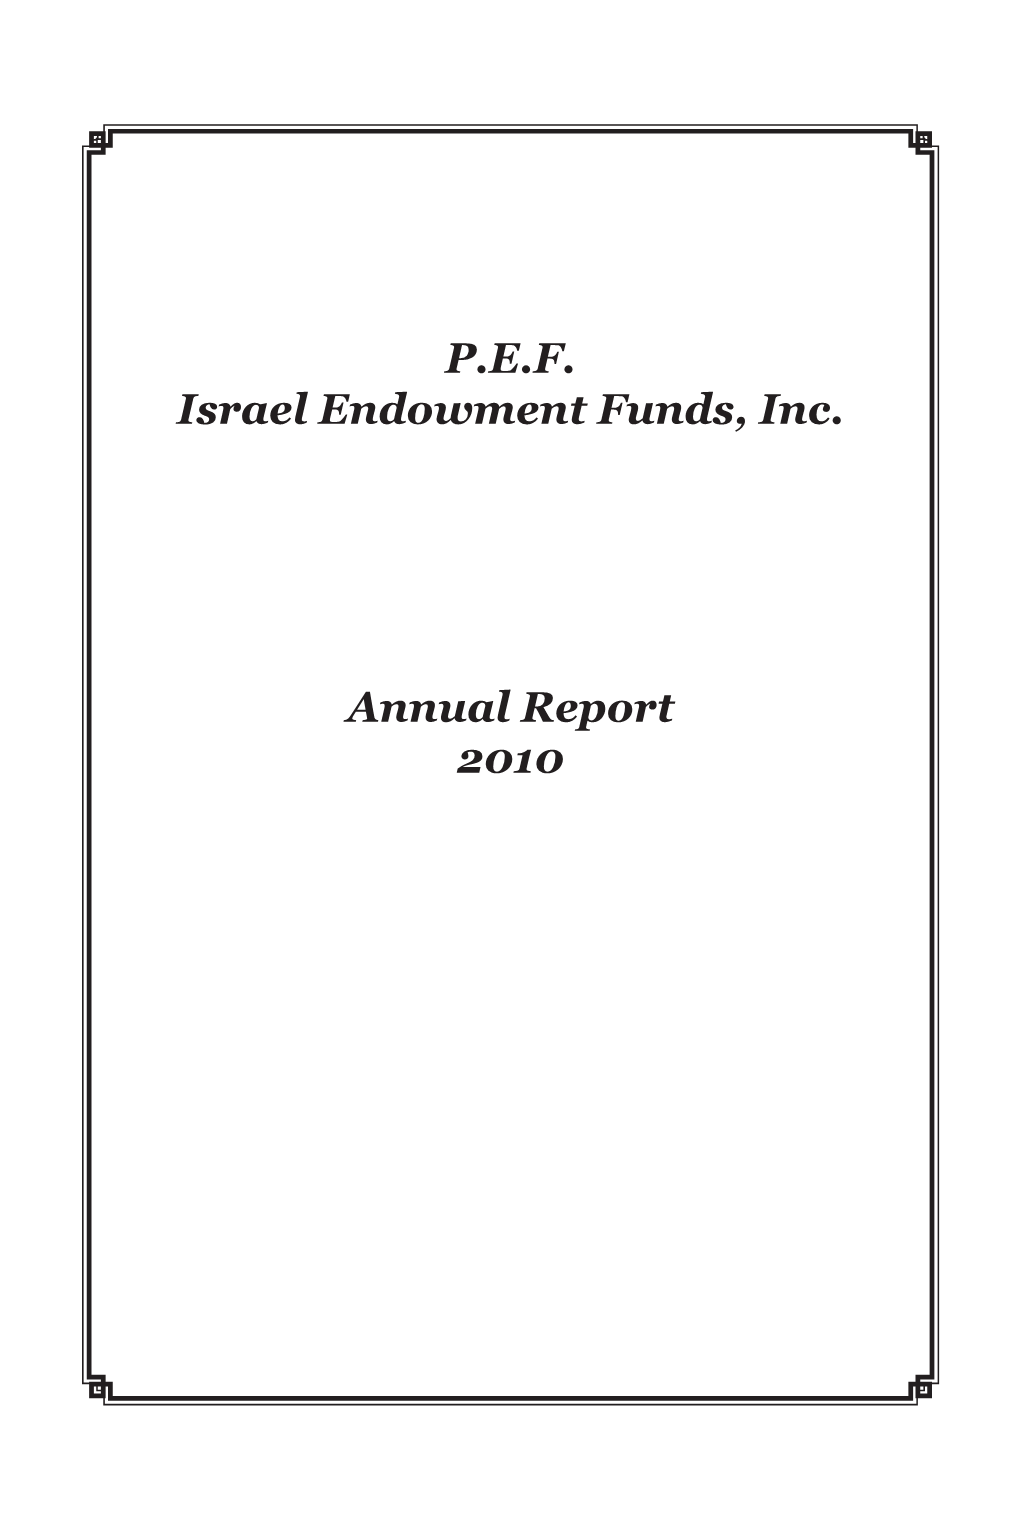 P.E.F. Israel Endowment Funds, Inc. Annual Report 2010